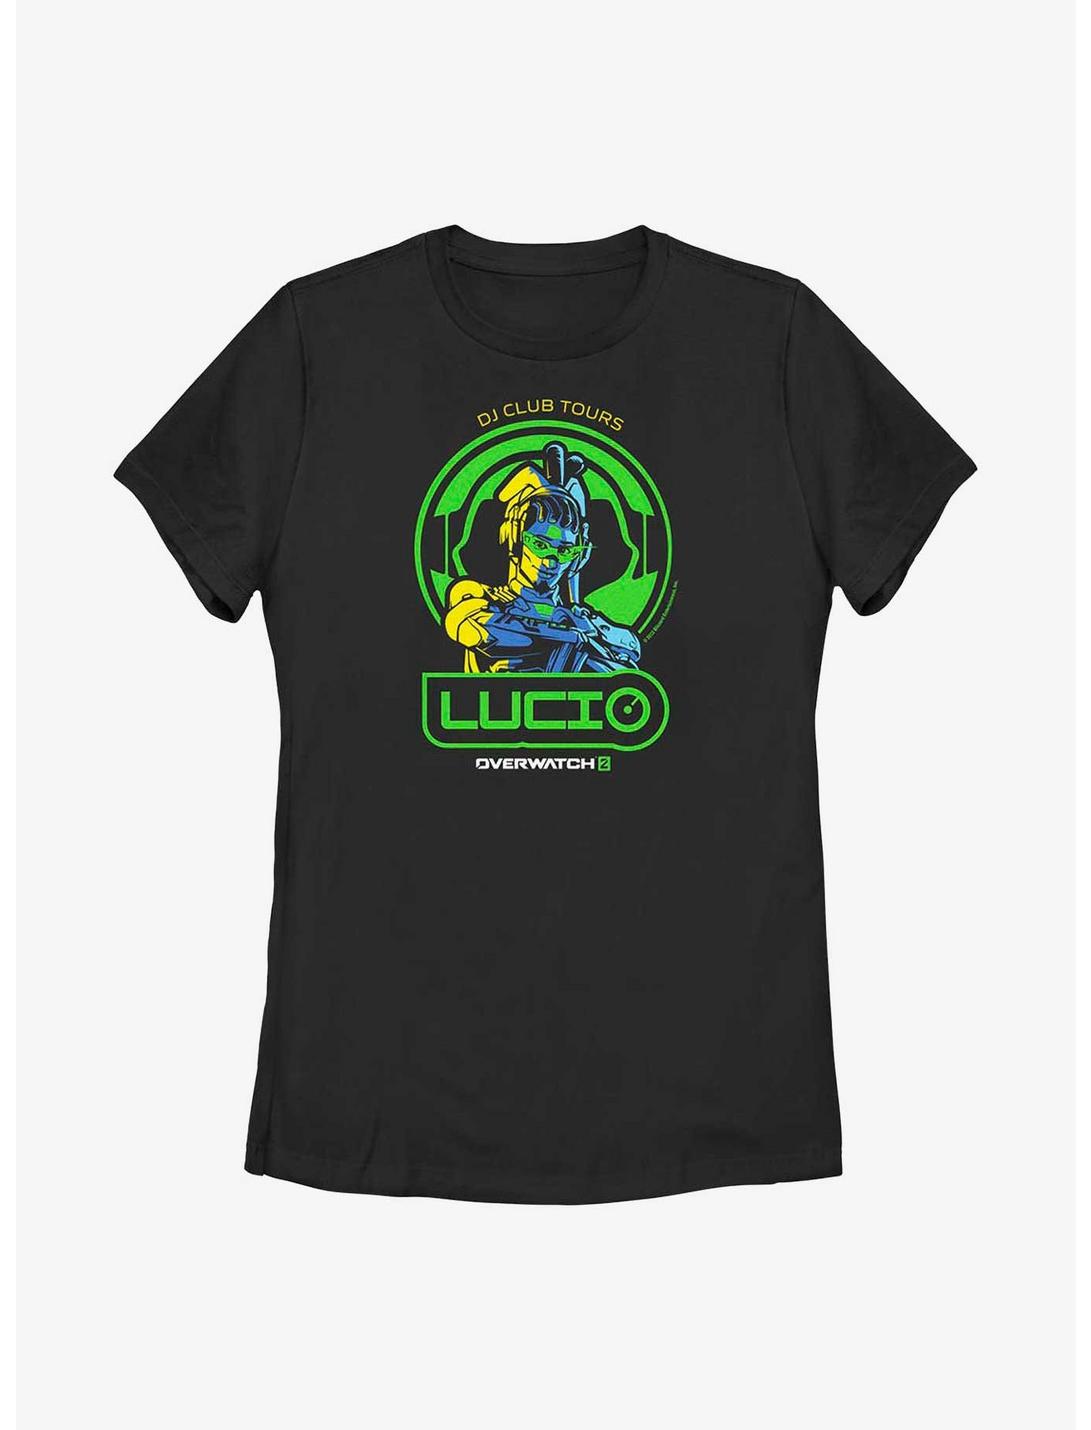 Overwatch 2 Lucio DJ Club Tours Womens T-Shirt, BLACK, hi-res